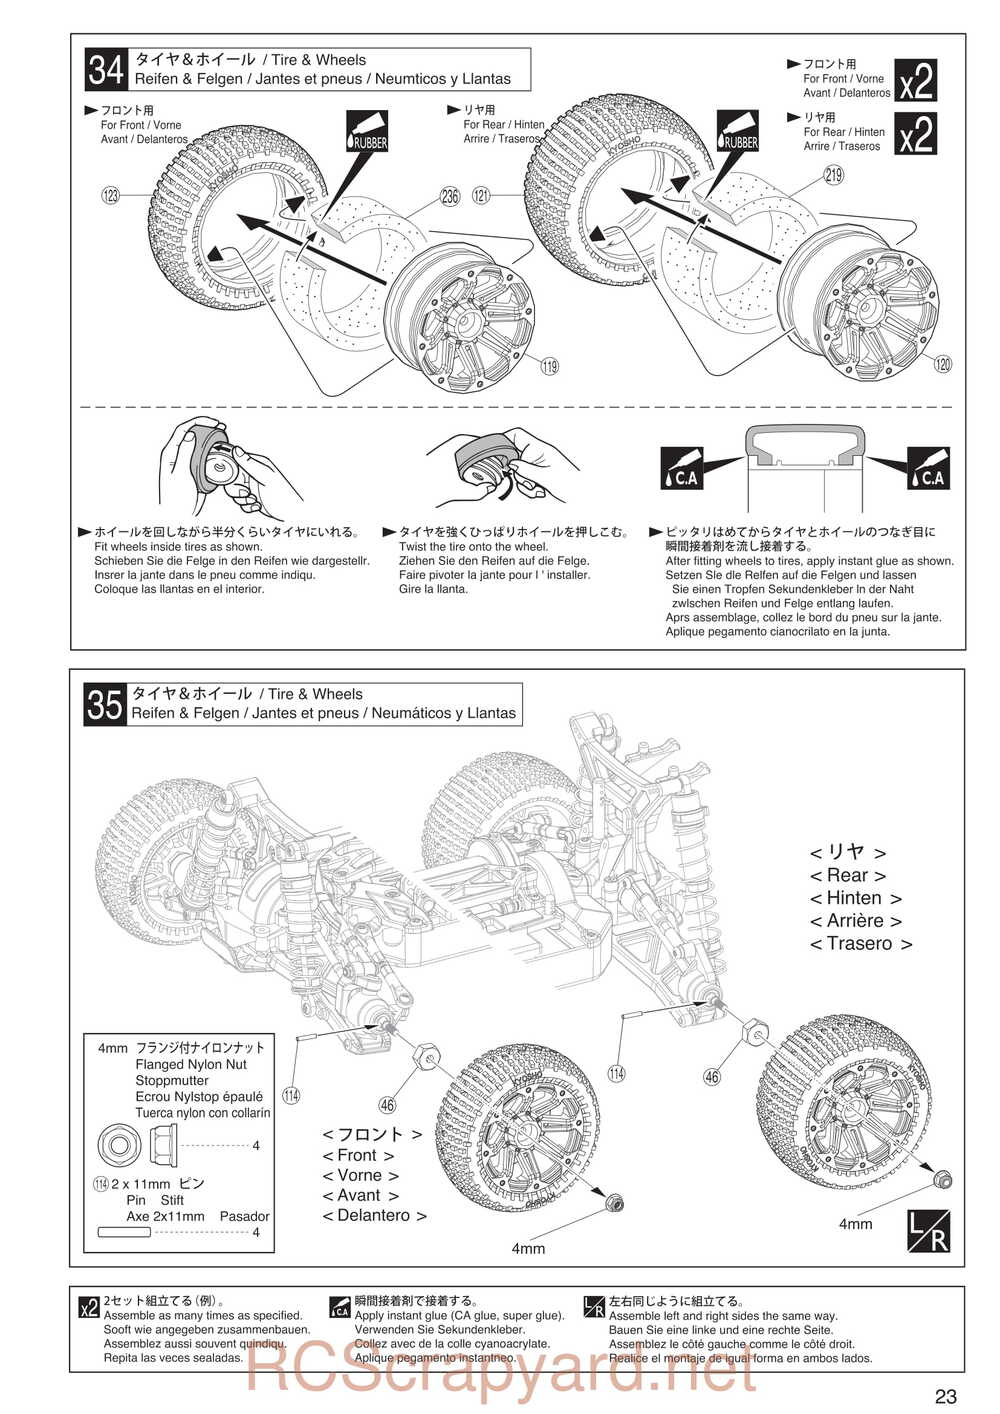 Kyosho - 30993 - Dirt-Hog - Manual - Page 23